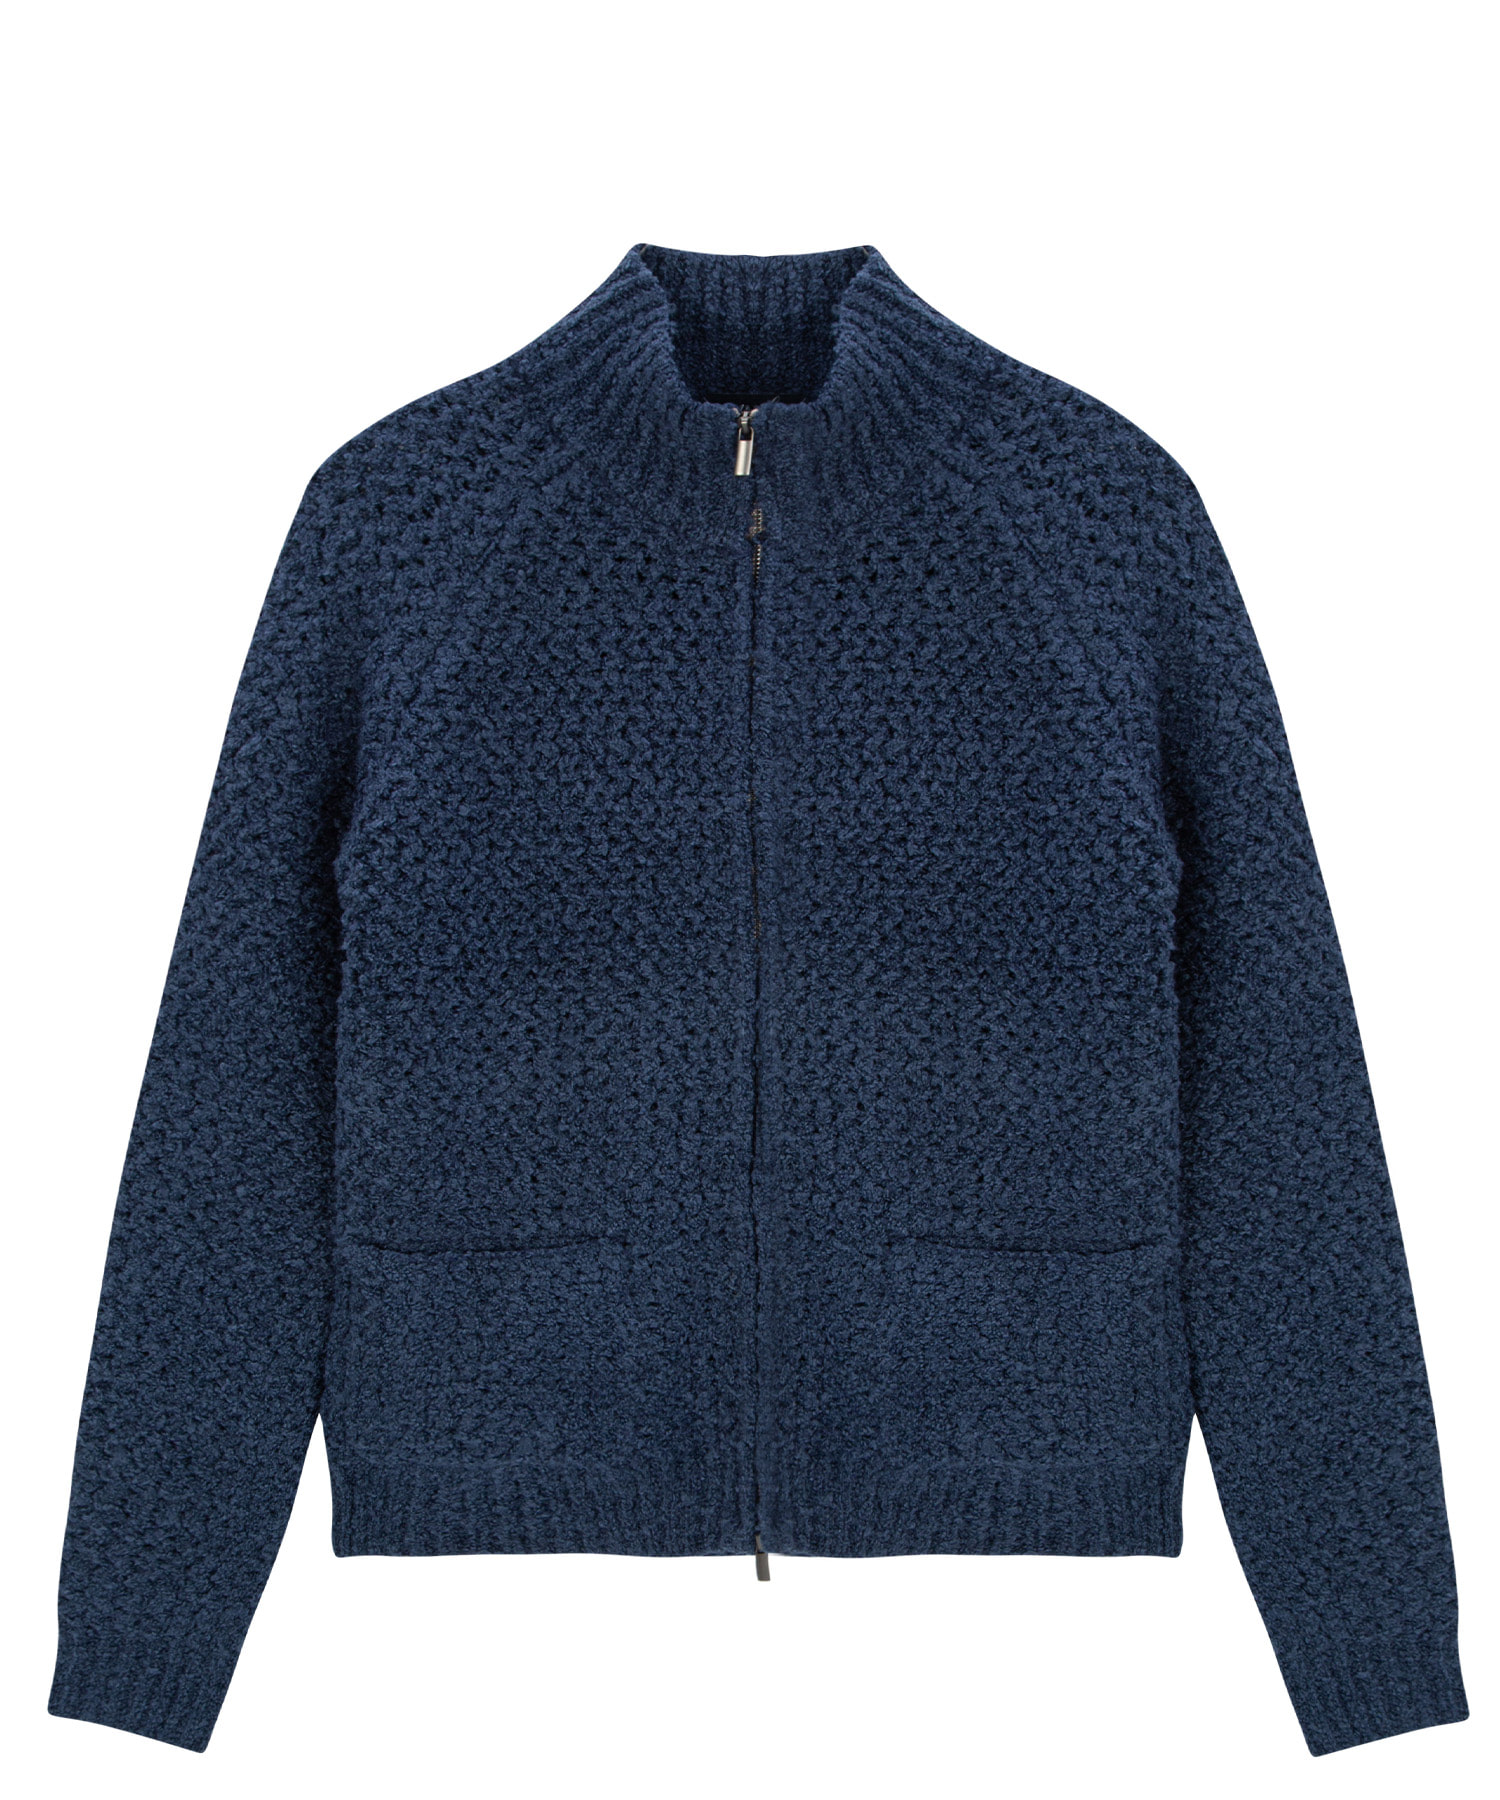 Wool Blend 2way Zipper Knit Cardigan - Navy